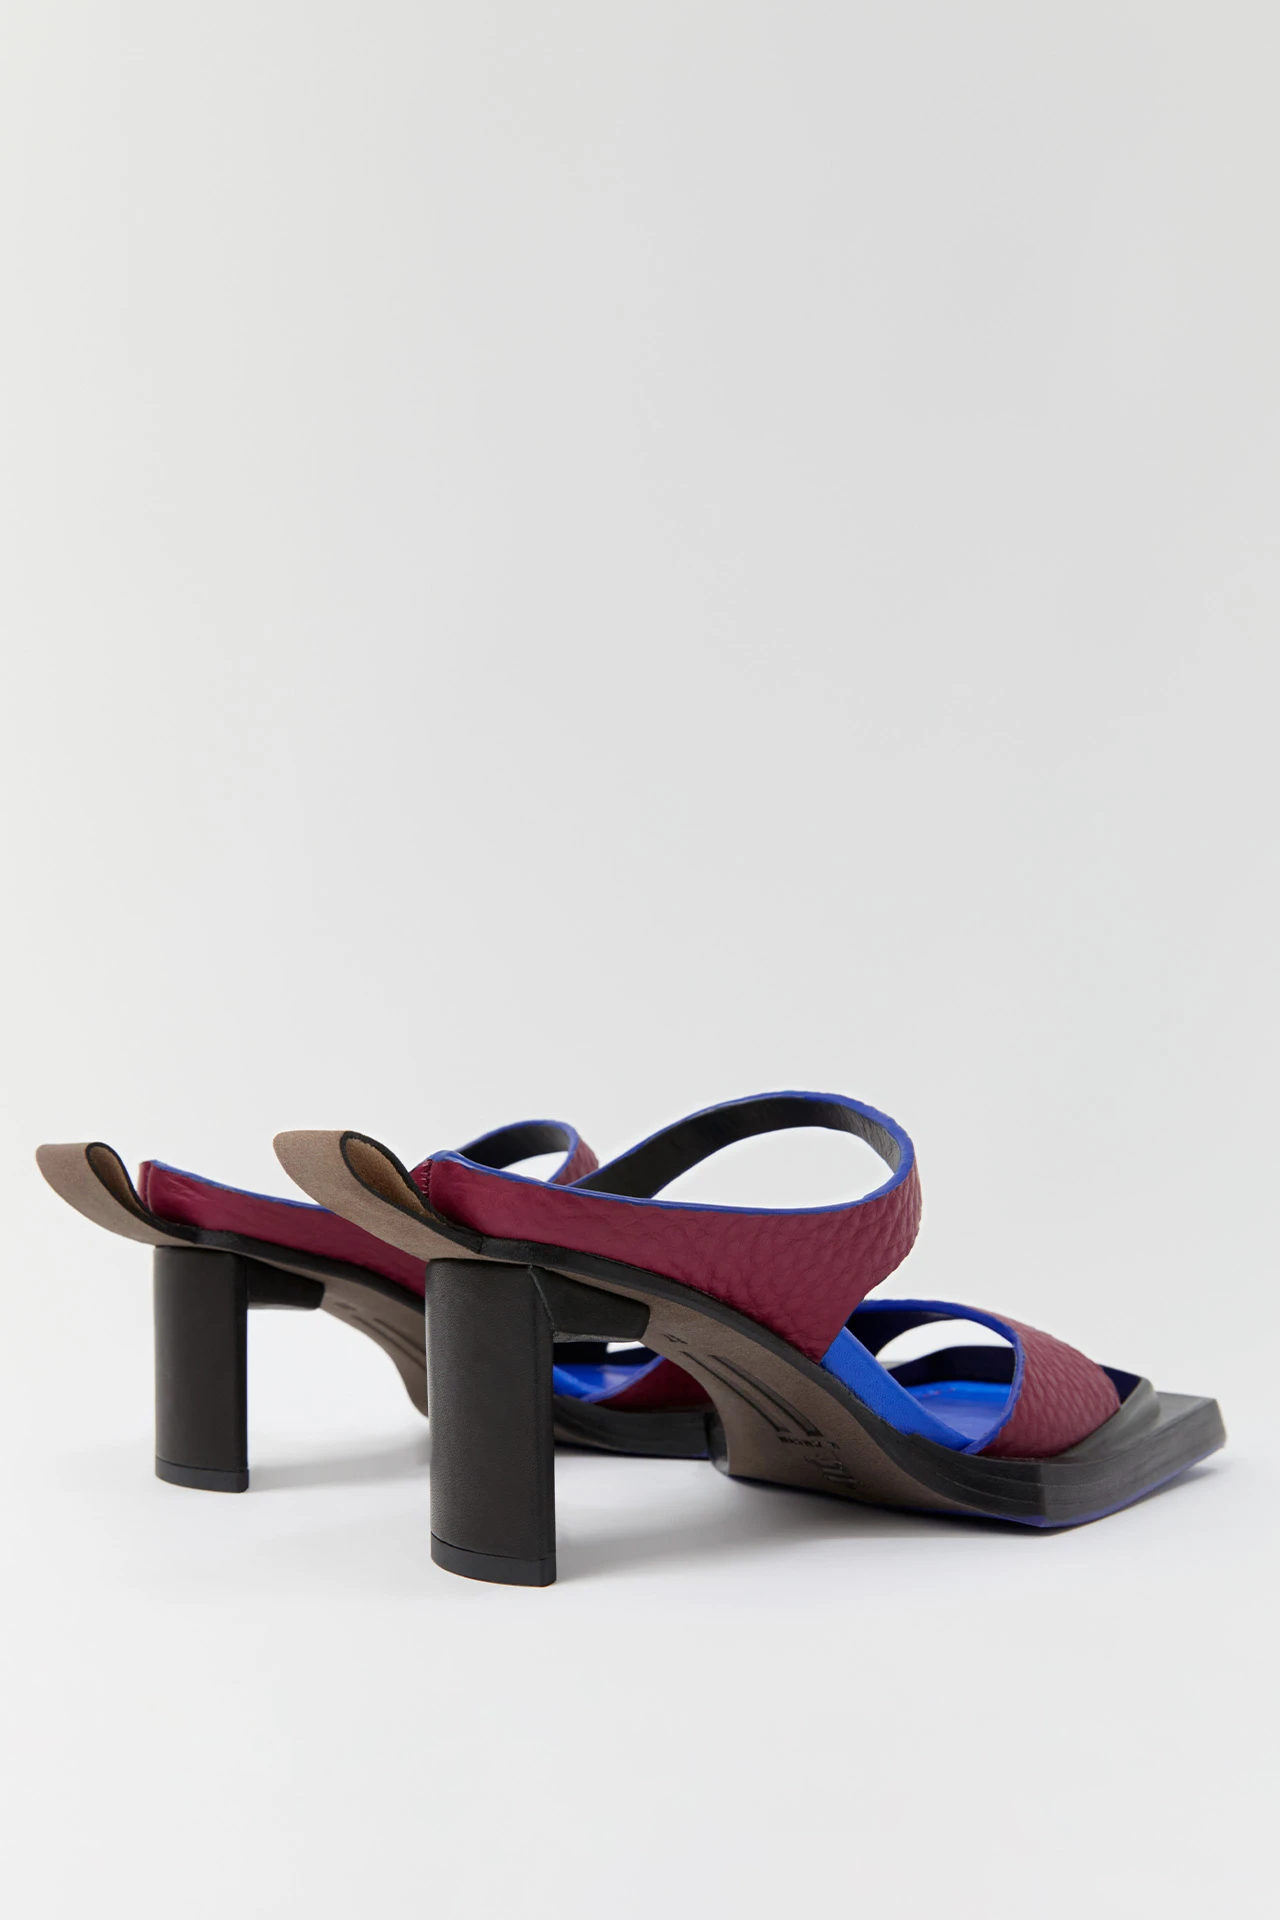 Miista-ren-burgundy-sandals-03